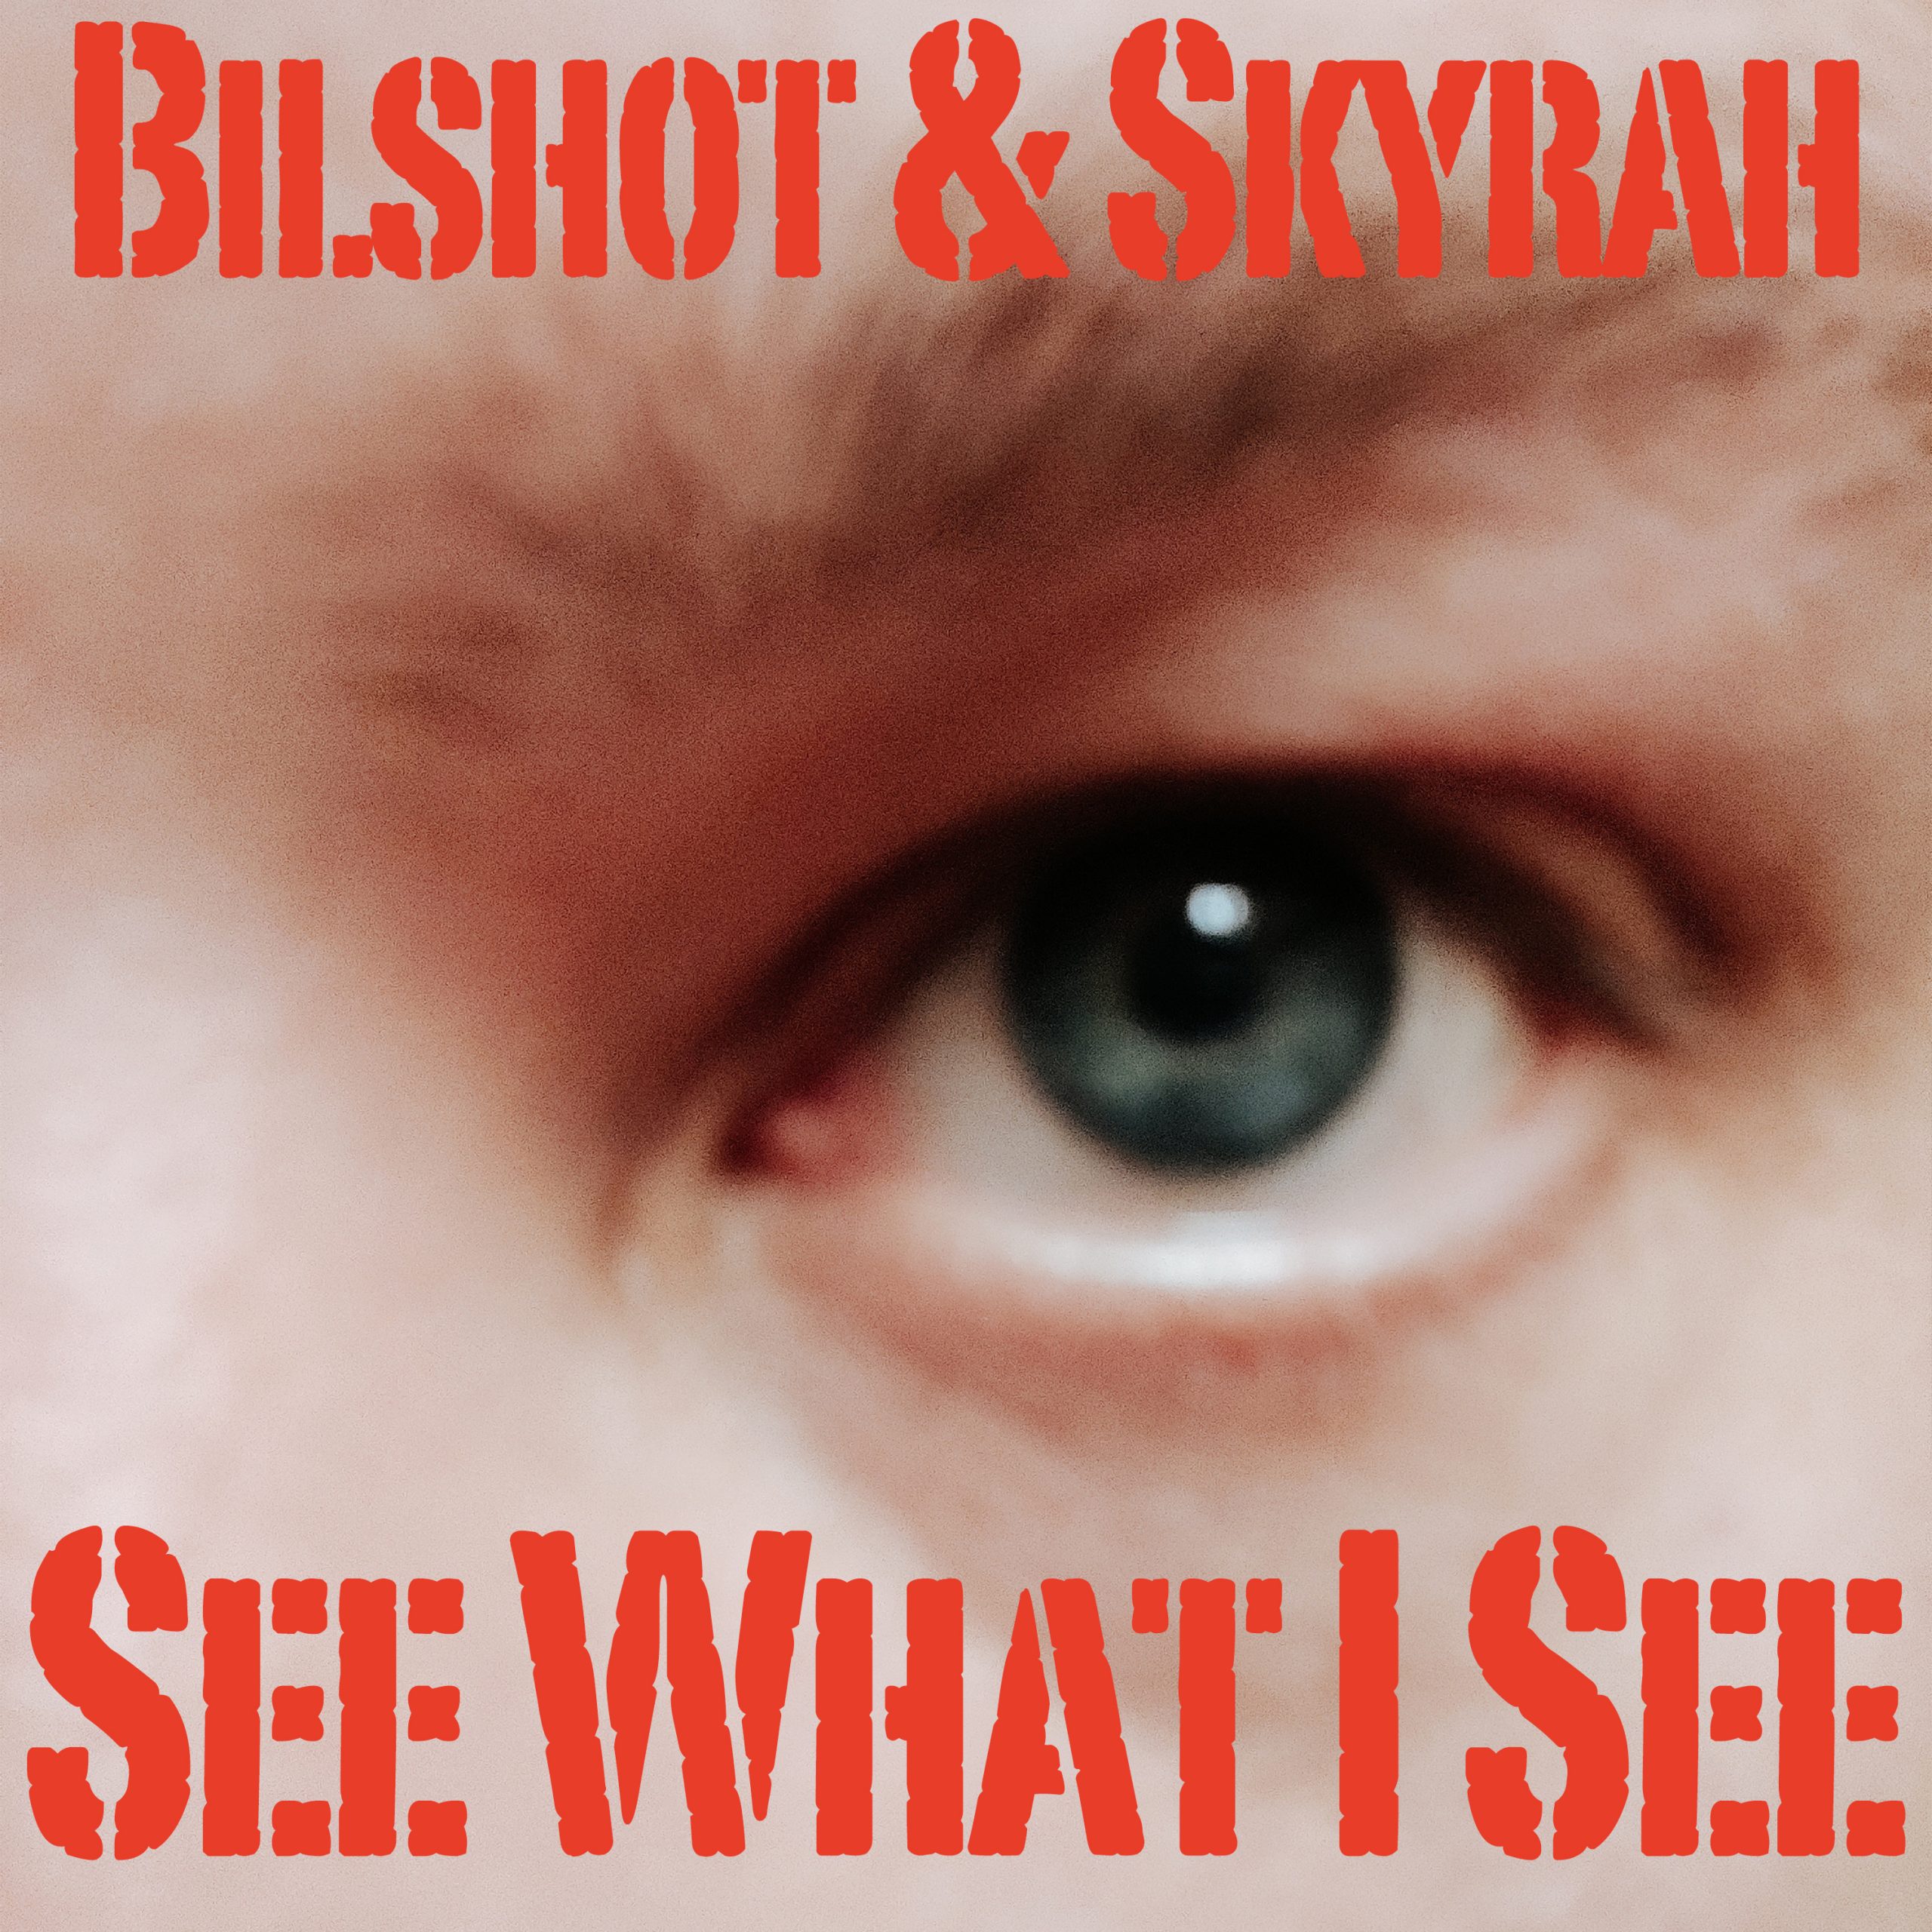 Bilshot & Skyrah NEW SONG OUT NOW